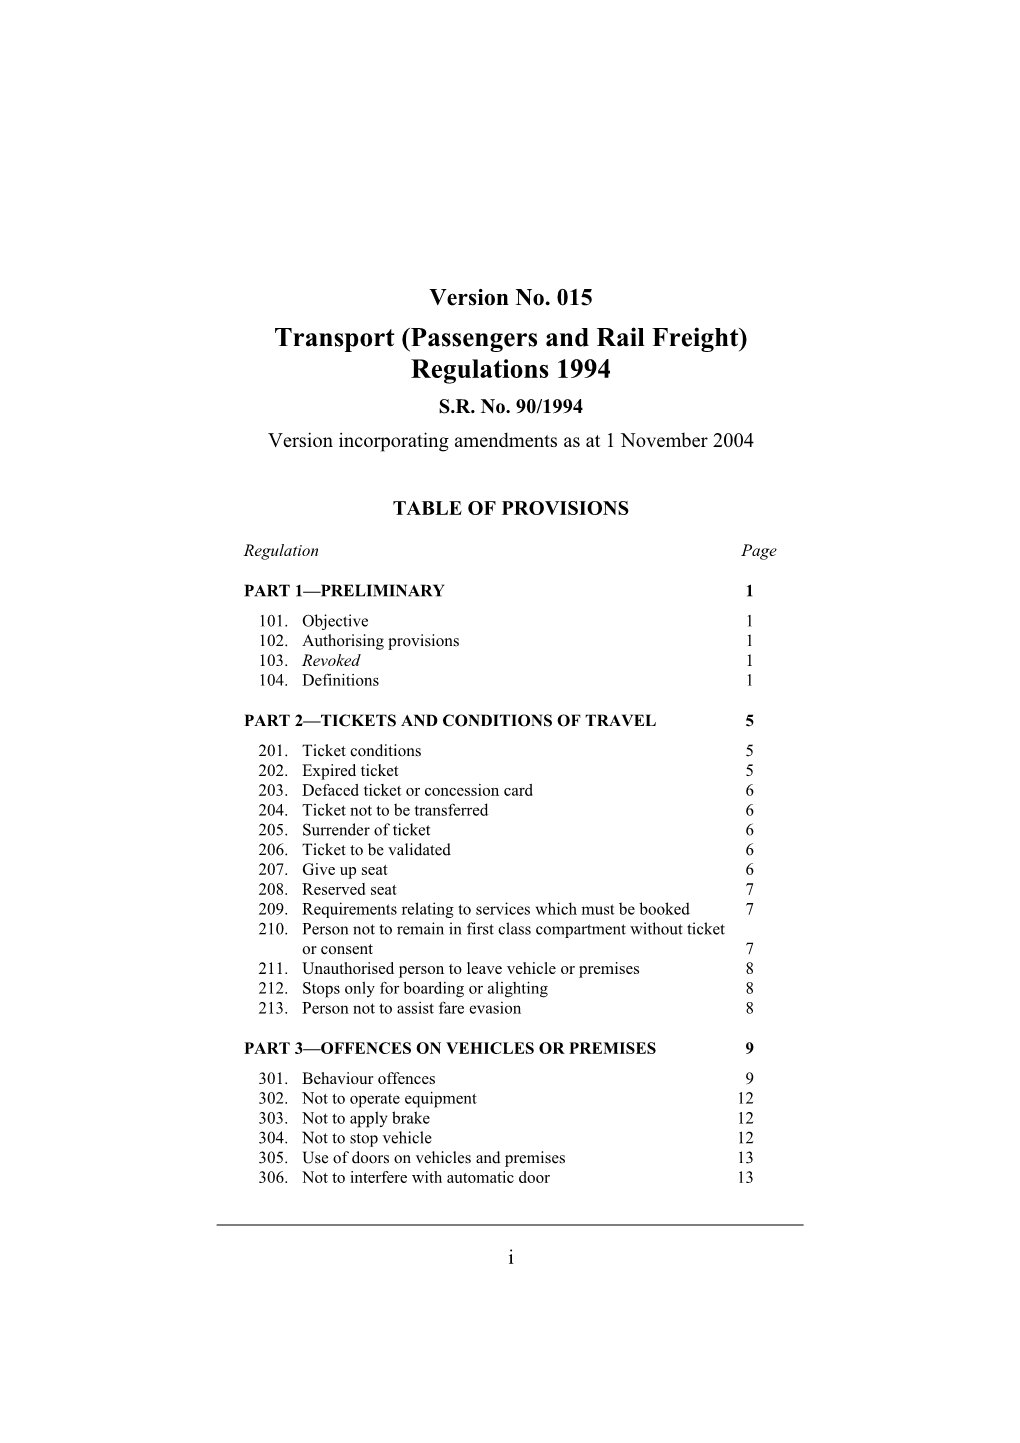 Transport (Passengers and Rail Freight) Regulations 1994